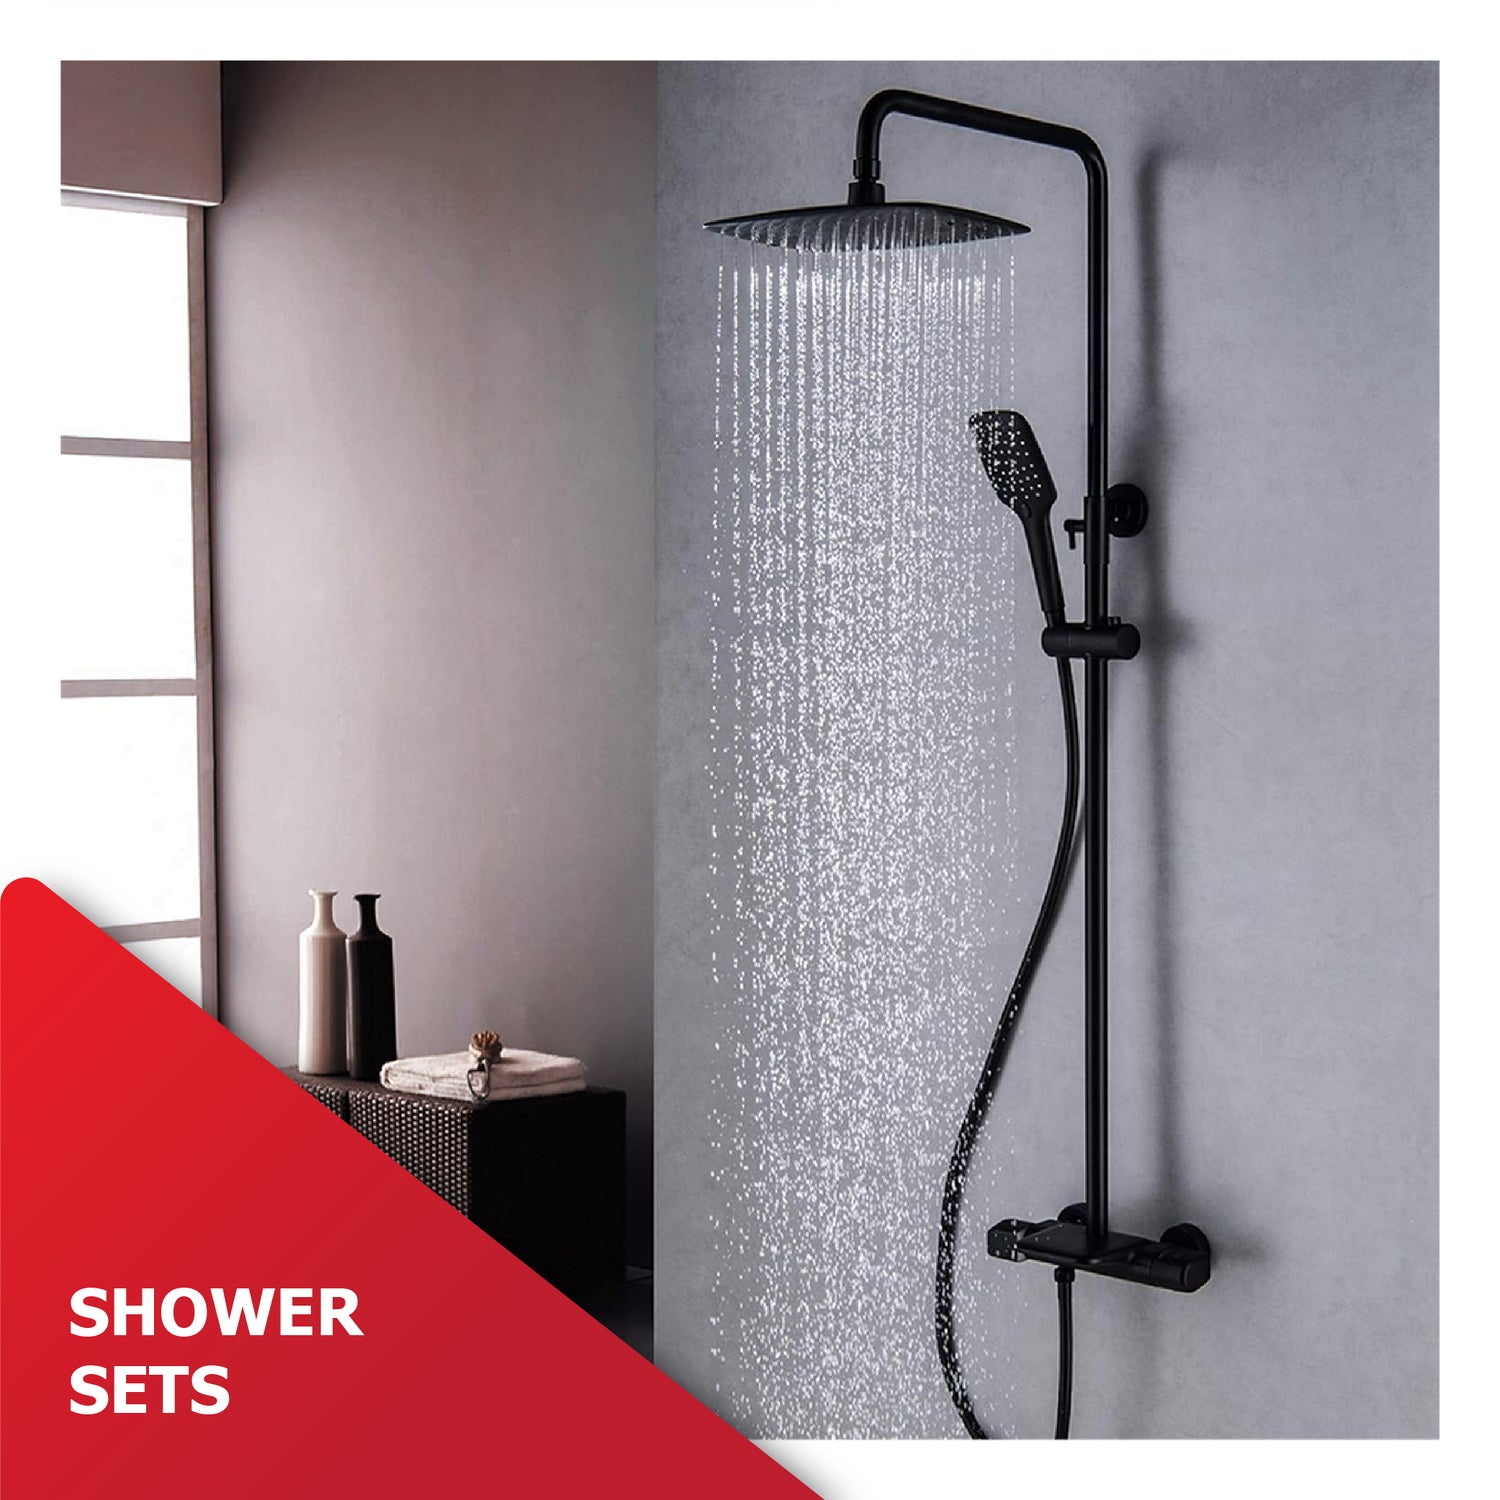 Shower Sets | Category